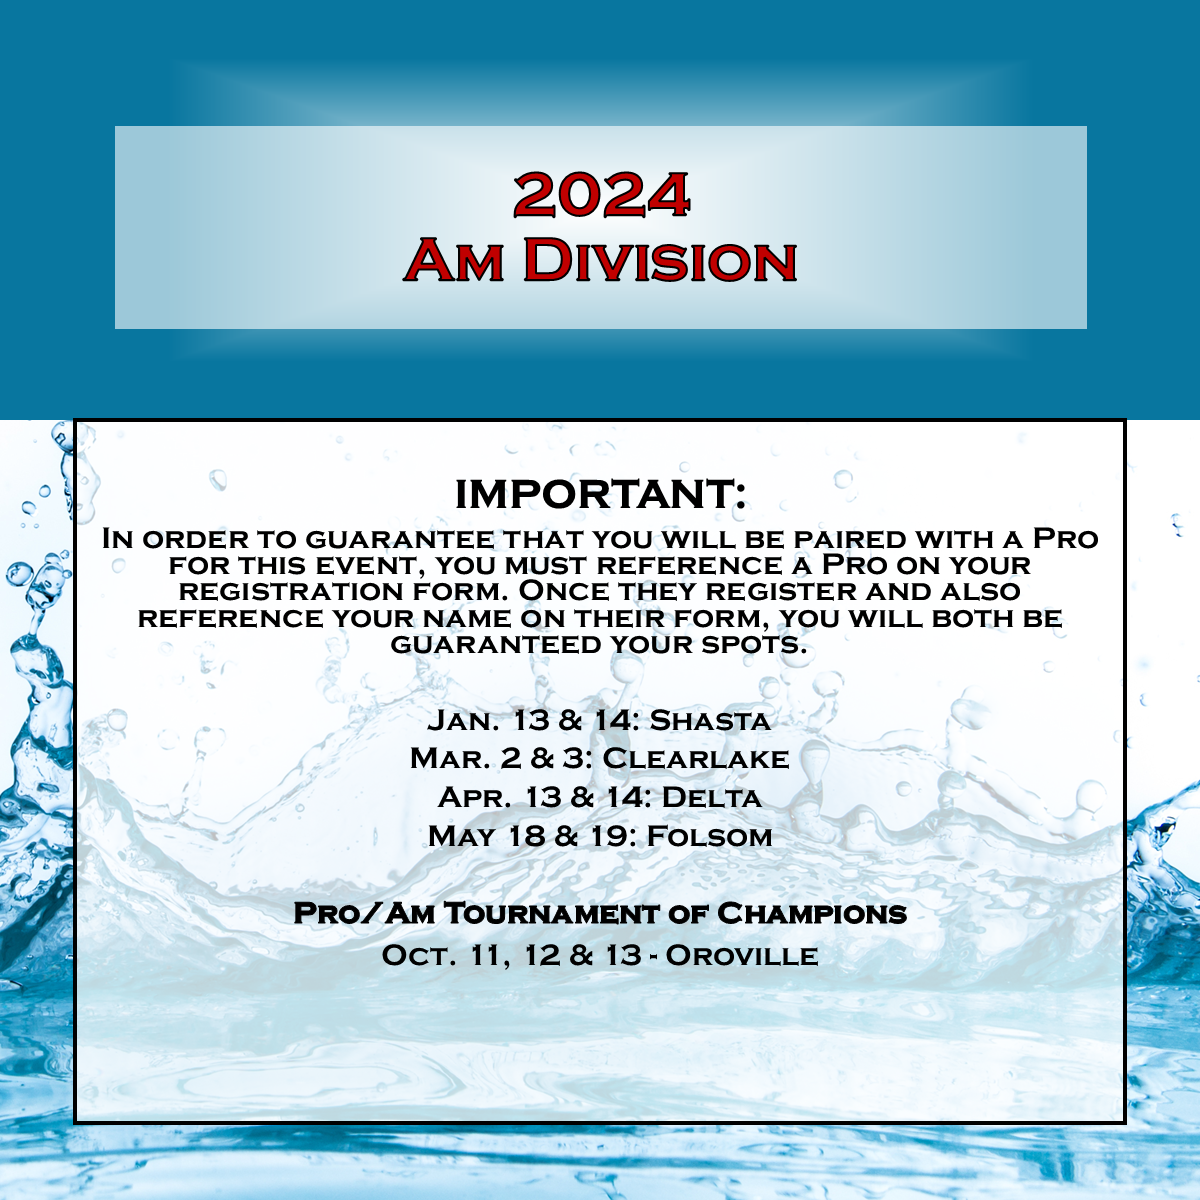 Am Division Entry: Shasta - January 13 & 14, 2024